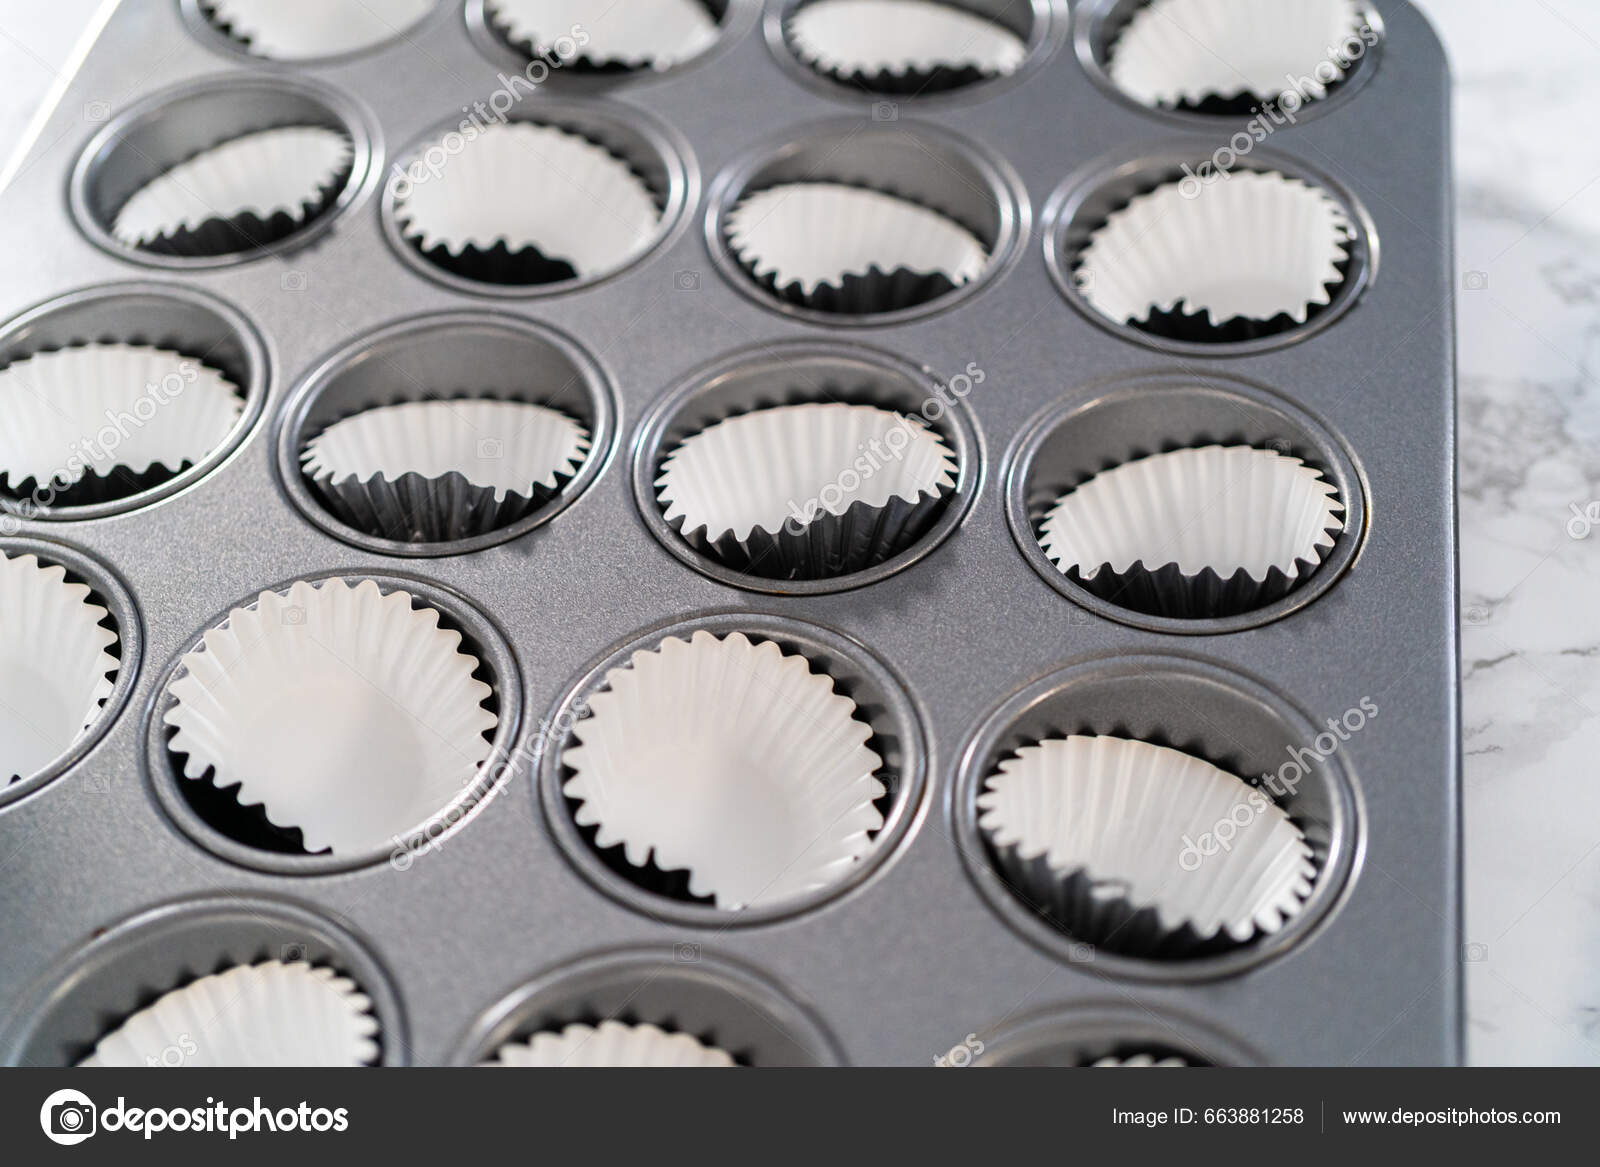 https://st5.depositphotos.com/1118354/66388/i/1600/depositphotos_663881258-stock-photo-scooping-cupcake-batter-dough-scoop.jpg